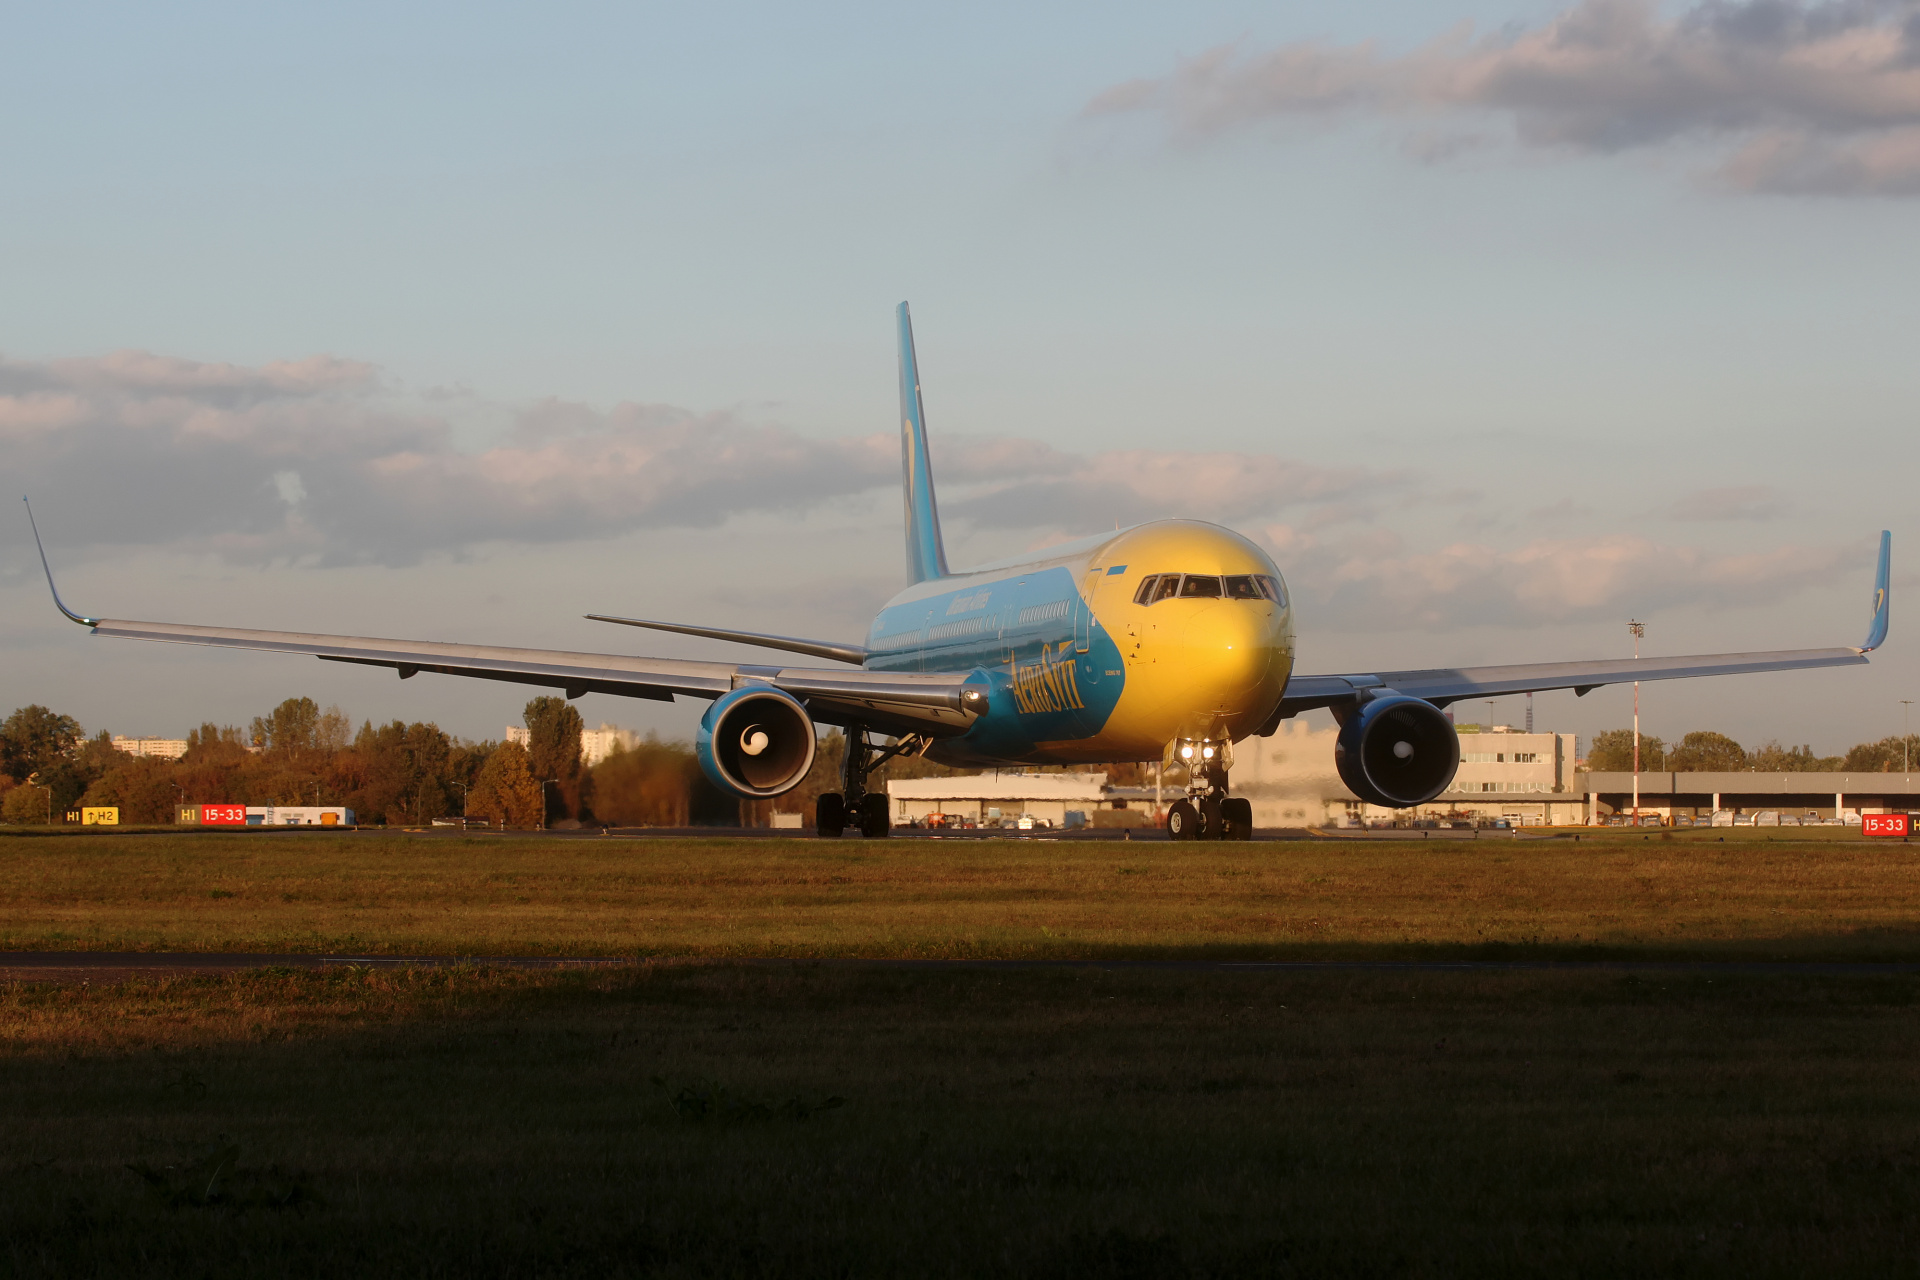 UR-AAI (Samoloty » Spotting na EPWA » Boeing 767-300 » AeroSvit Ukrainian Airlines)